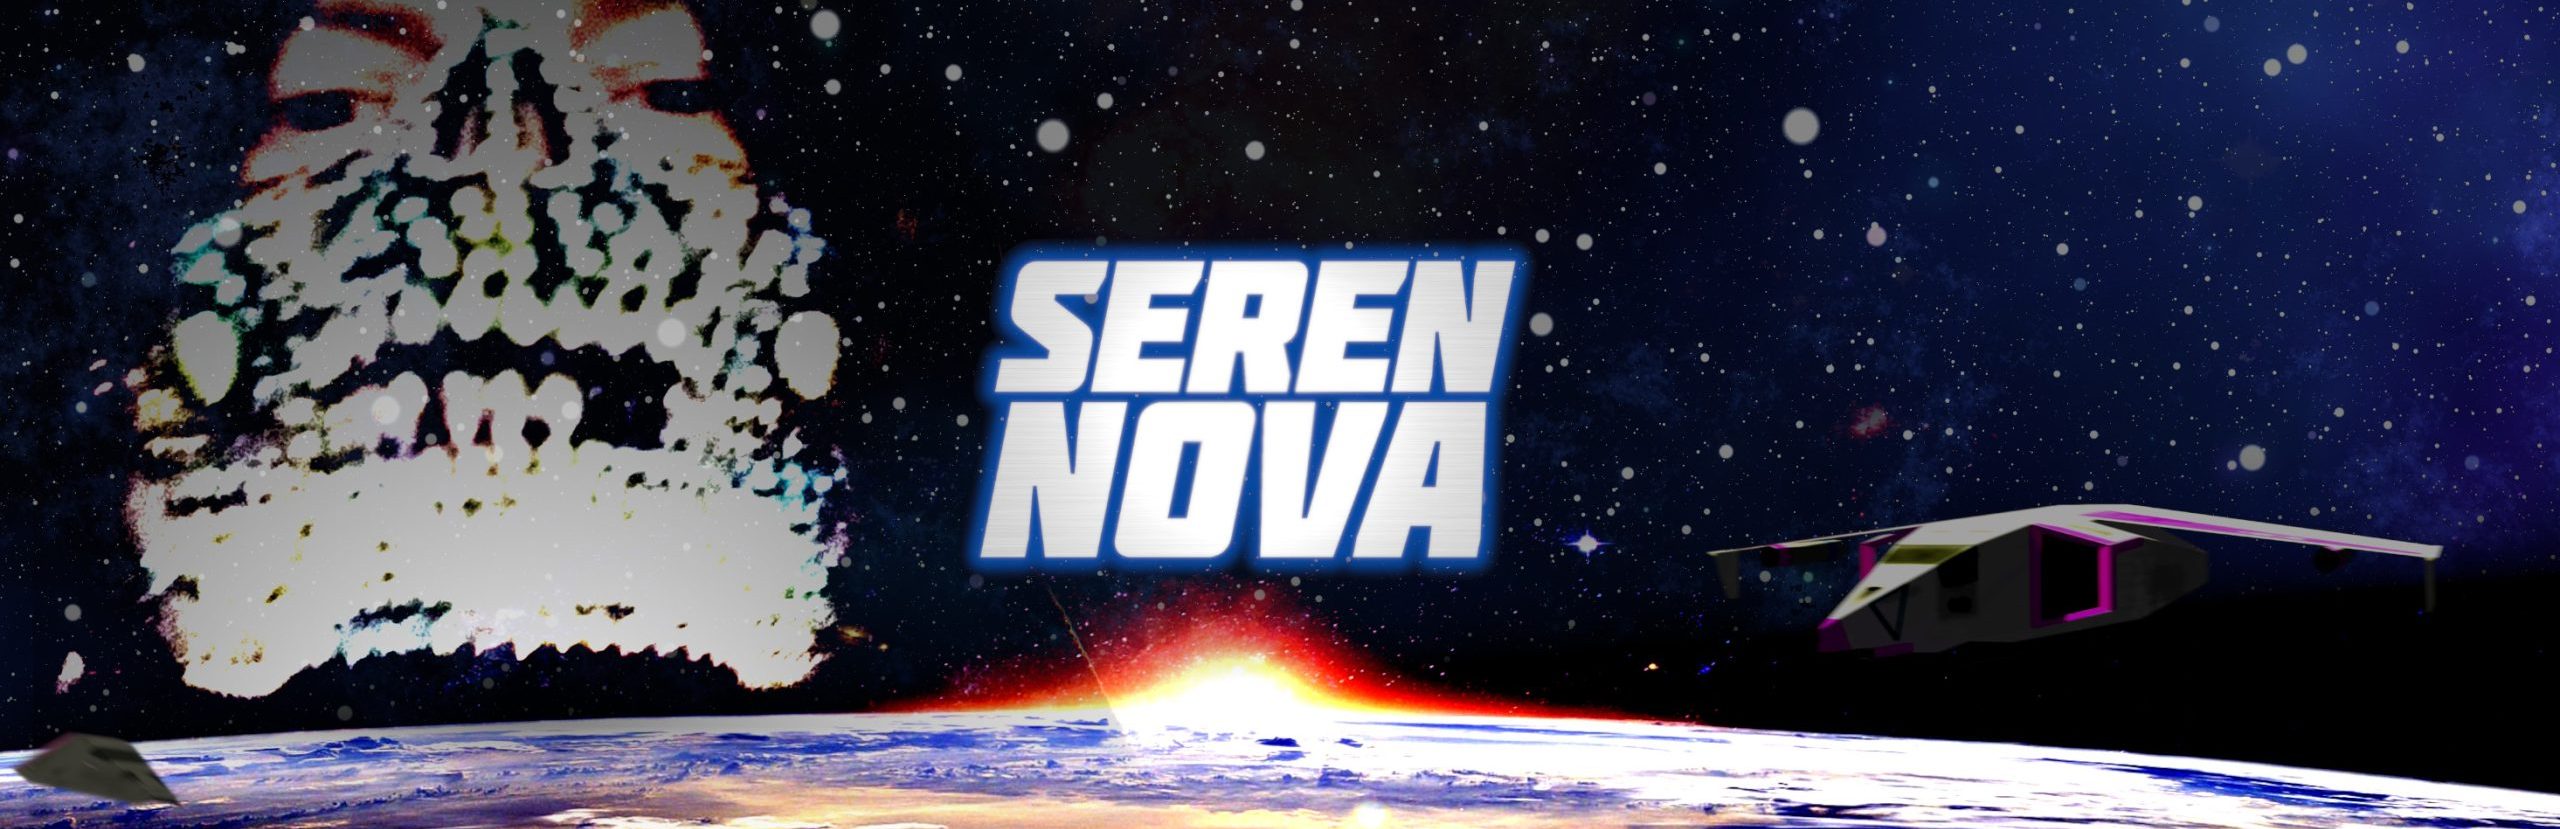 Seren Nova game